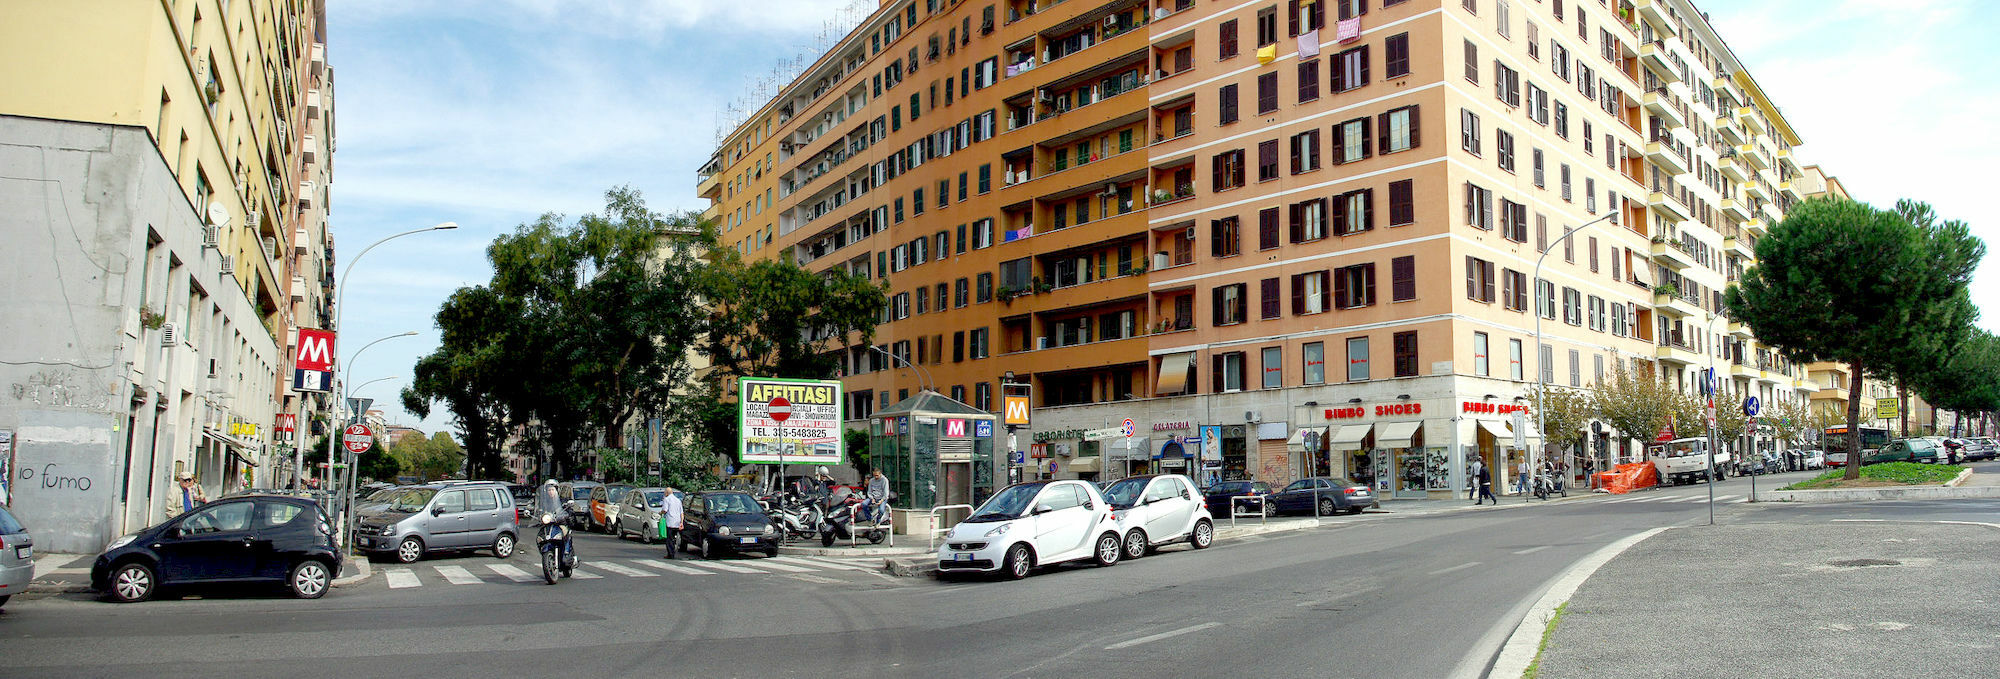 In Roma Life Hotel Exterior foto